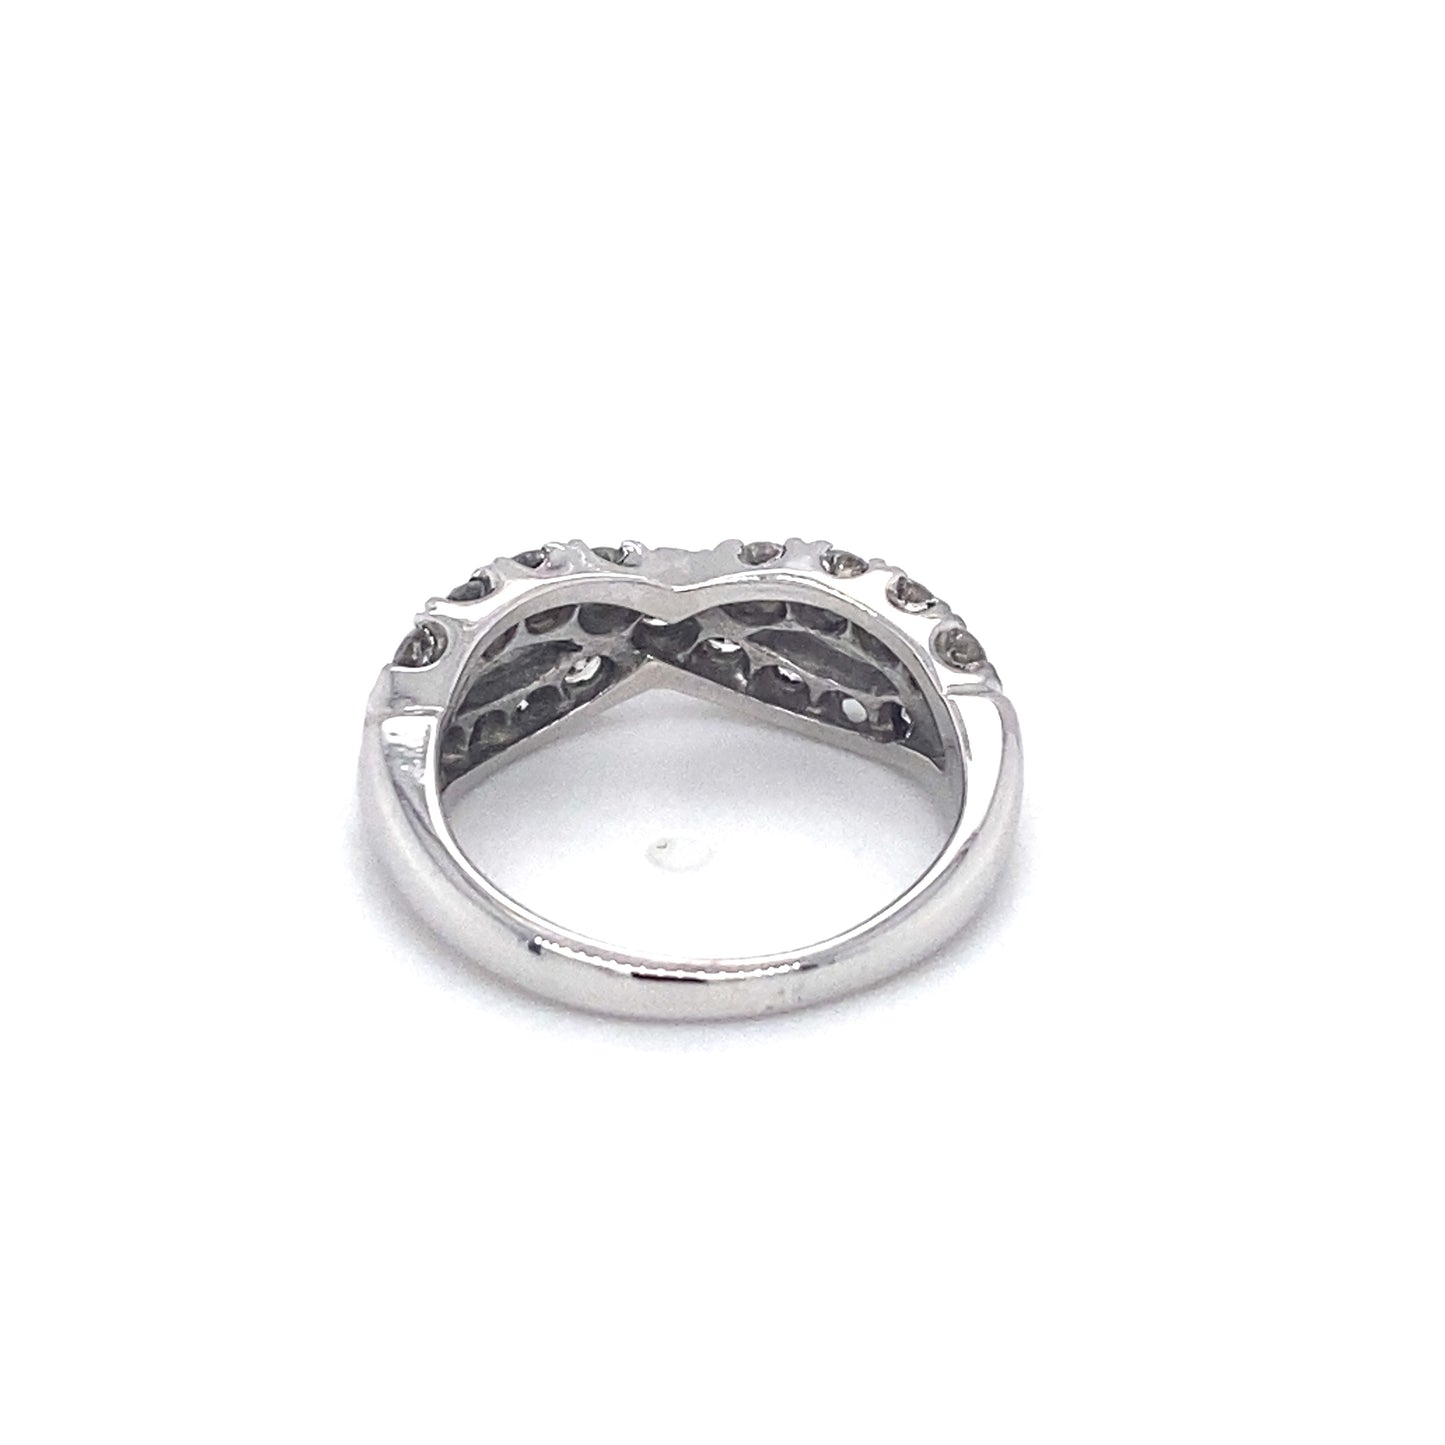 Circa 1960s 1.0 Carat F Color Diamond Infinity Ring in 14K White Gold